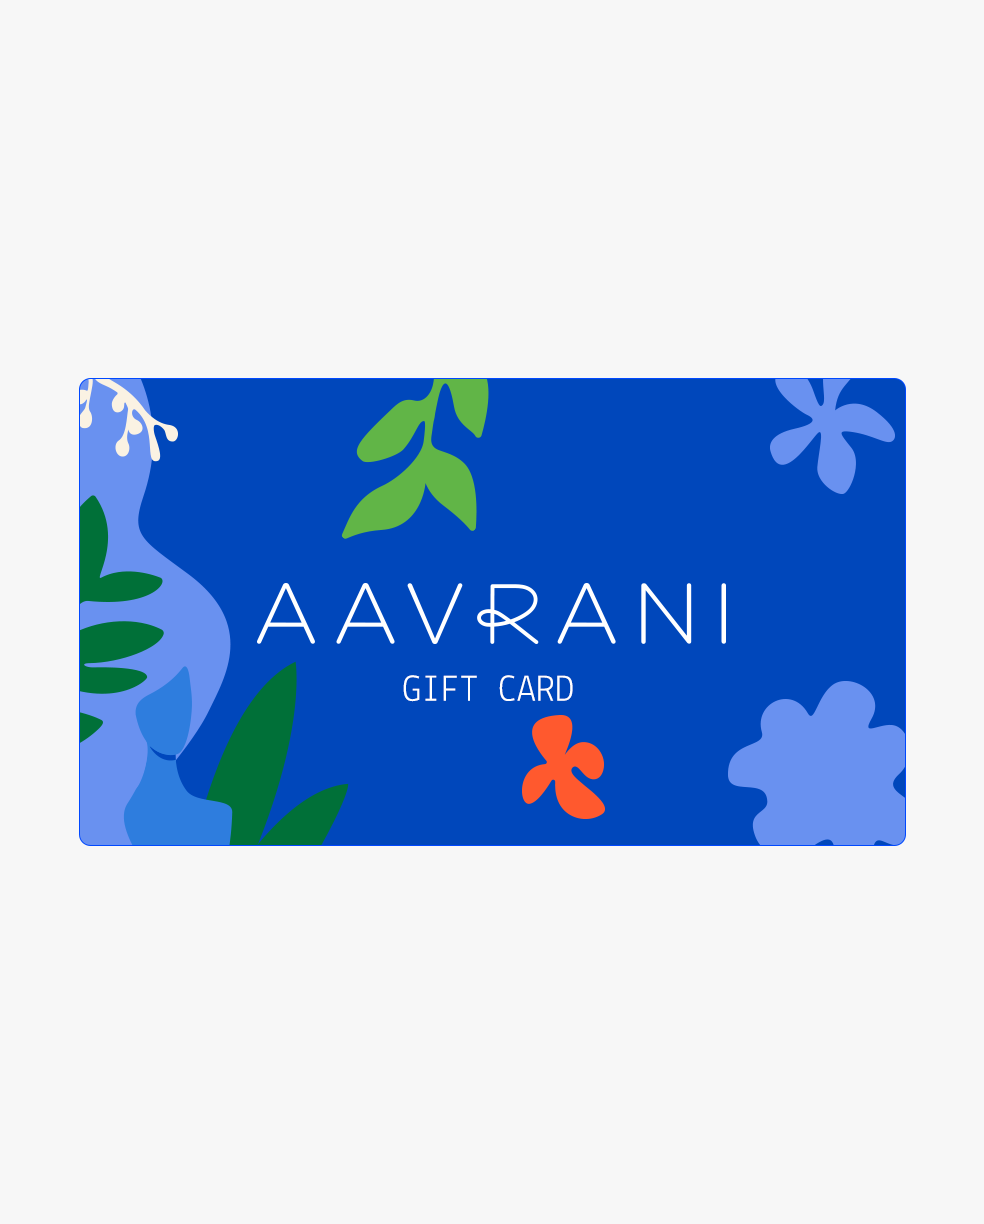 AAVRANI Digital Gift Card Against Light Grey Background